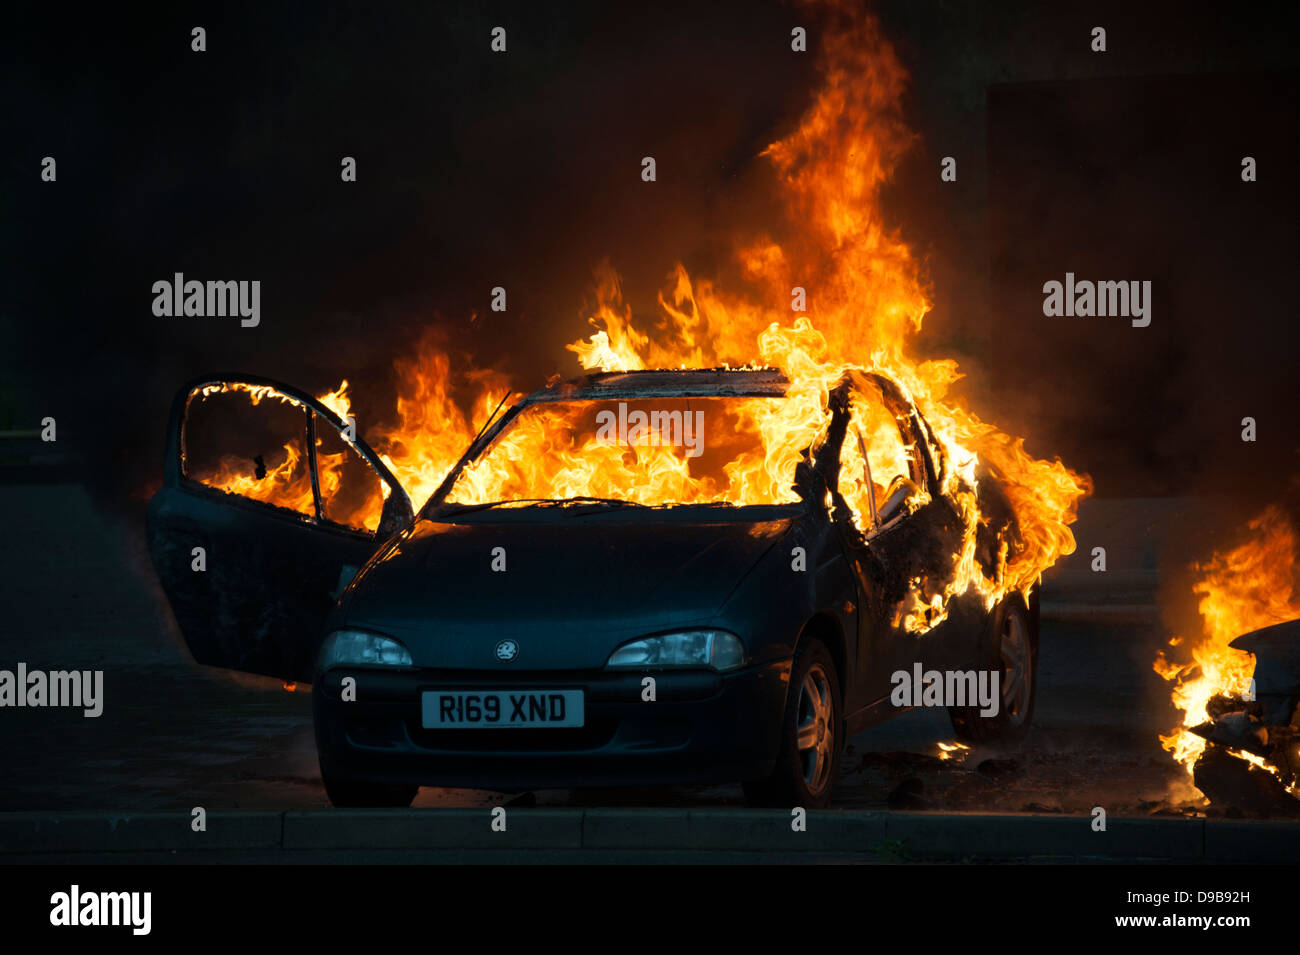 Car well alight on fire petrol bomb flames Stock Photo